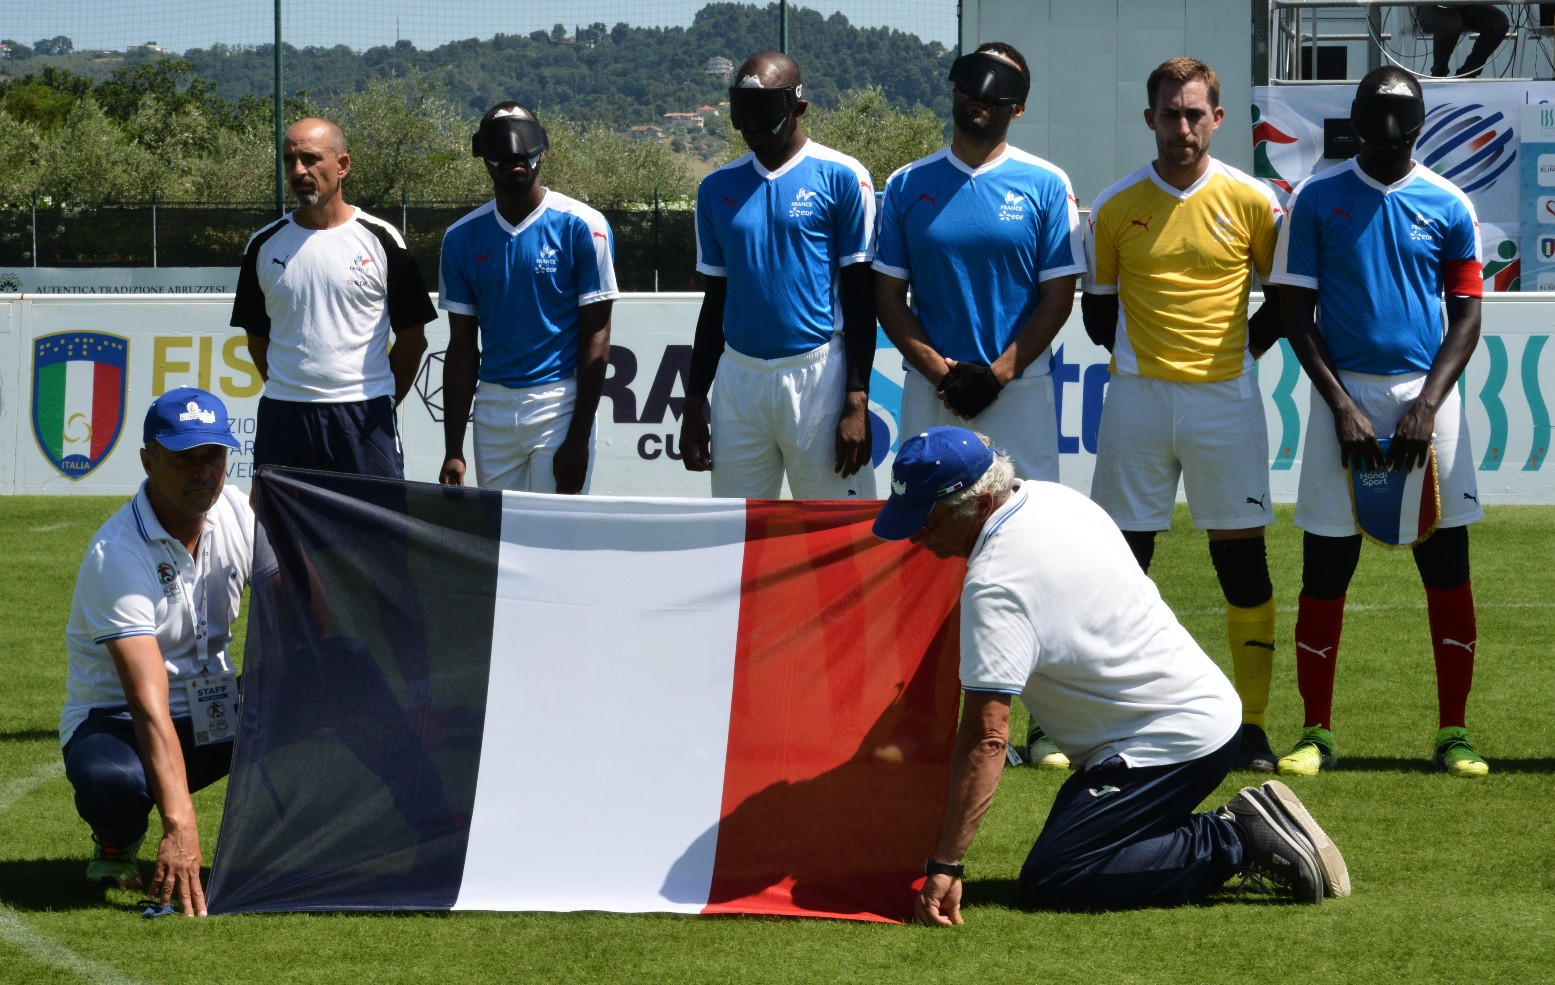 France beat Turkey on penalties to win the IBSA Blind Football European Championship ©IBSA